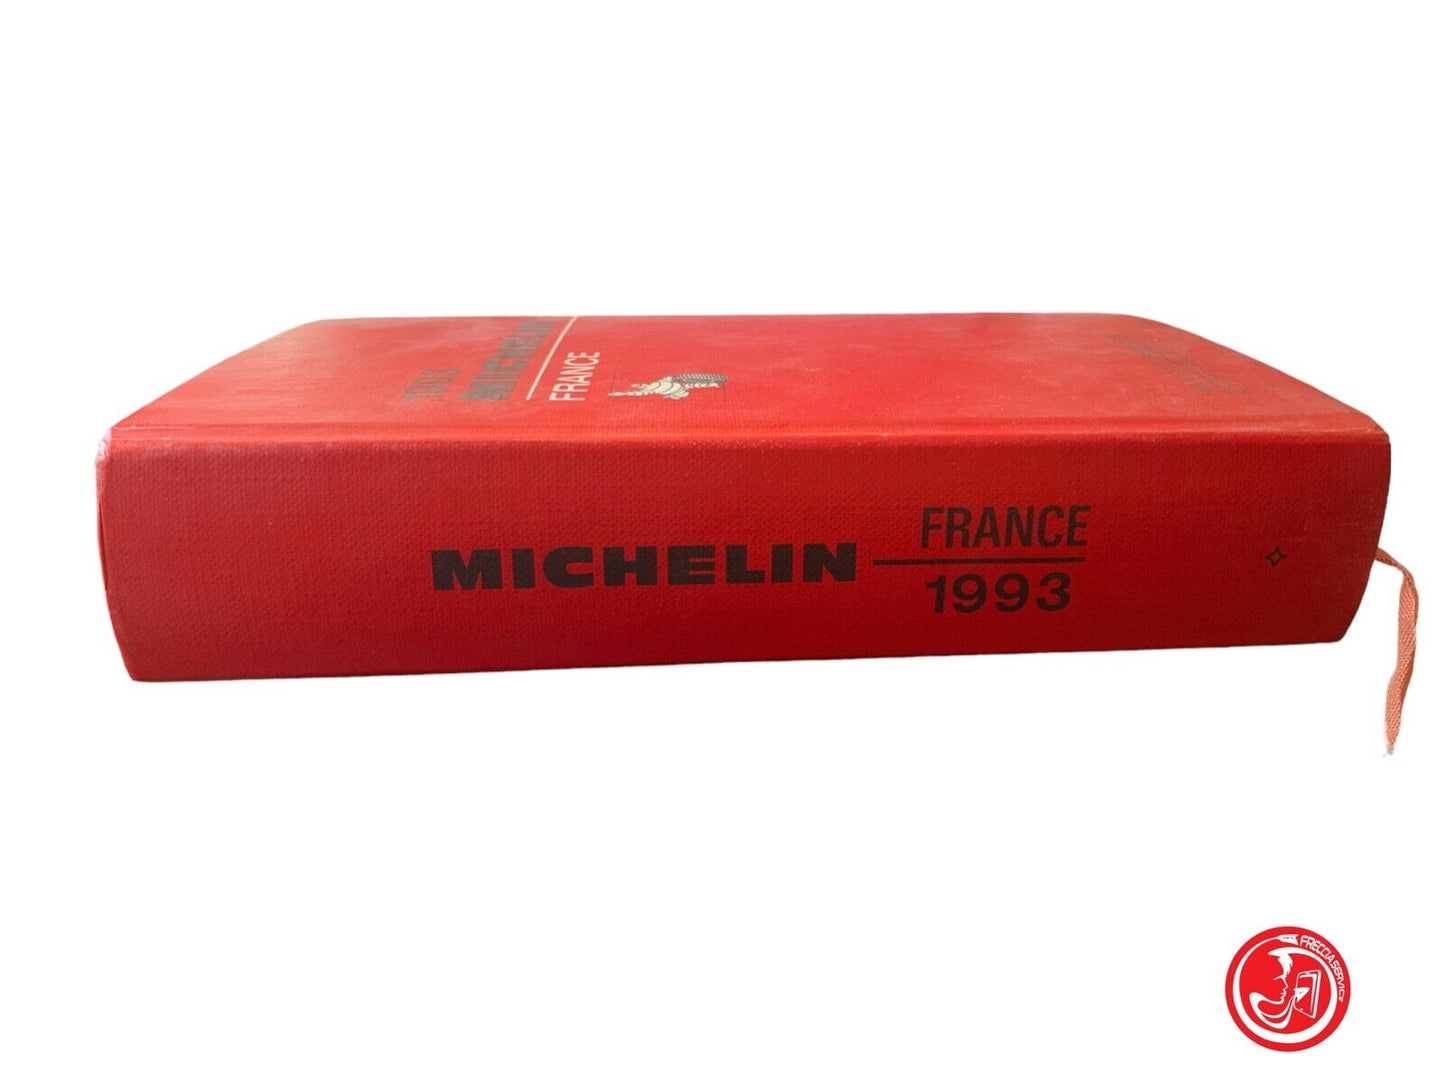 Michelin France 1993